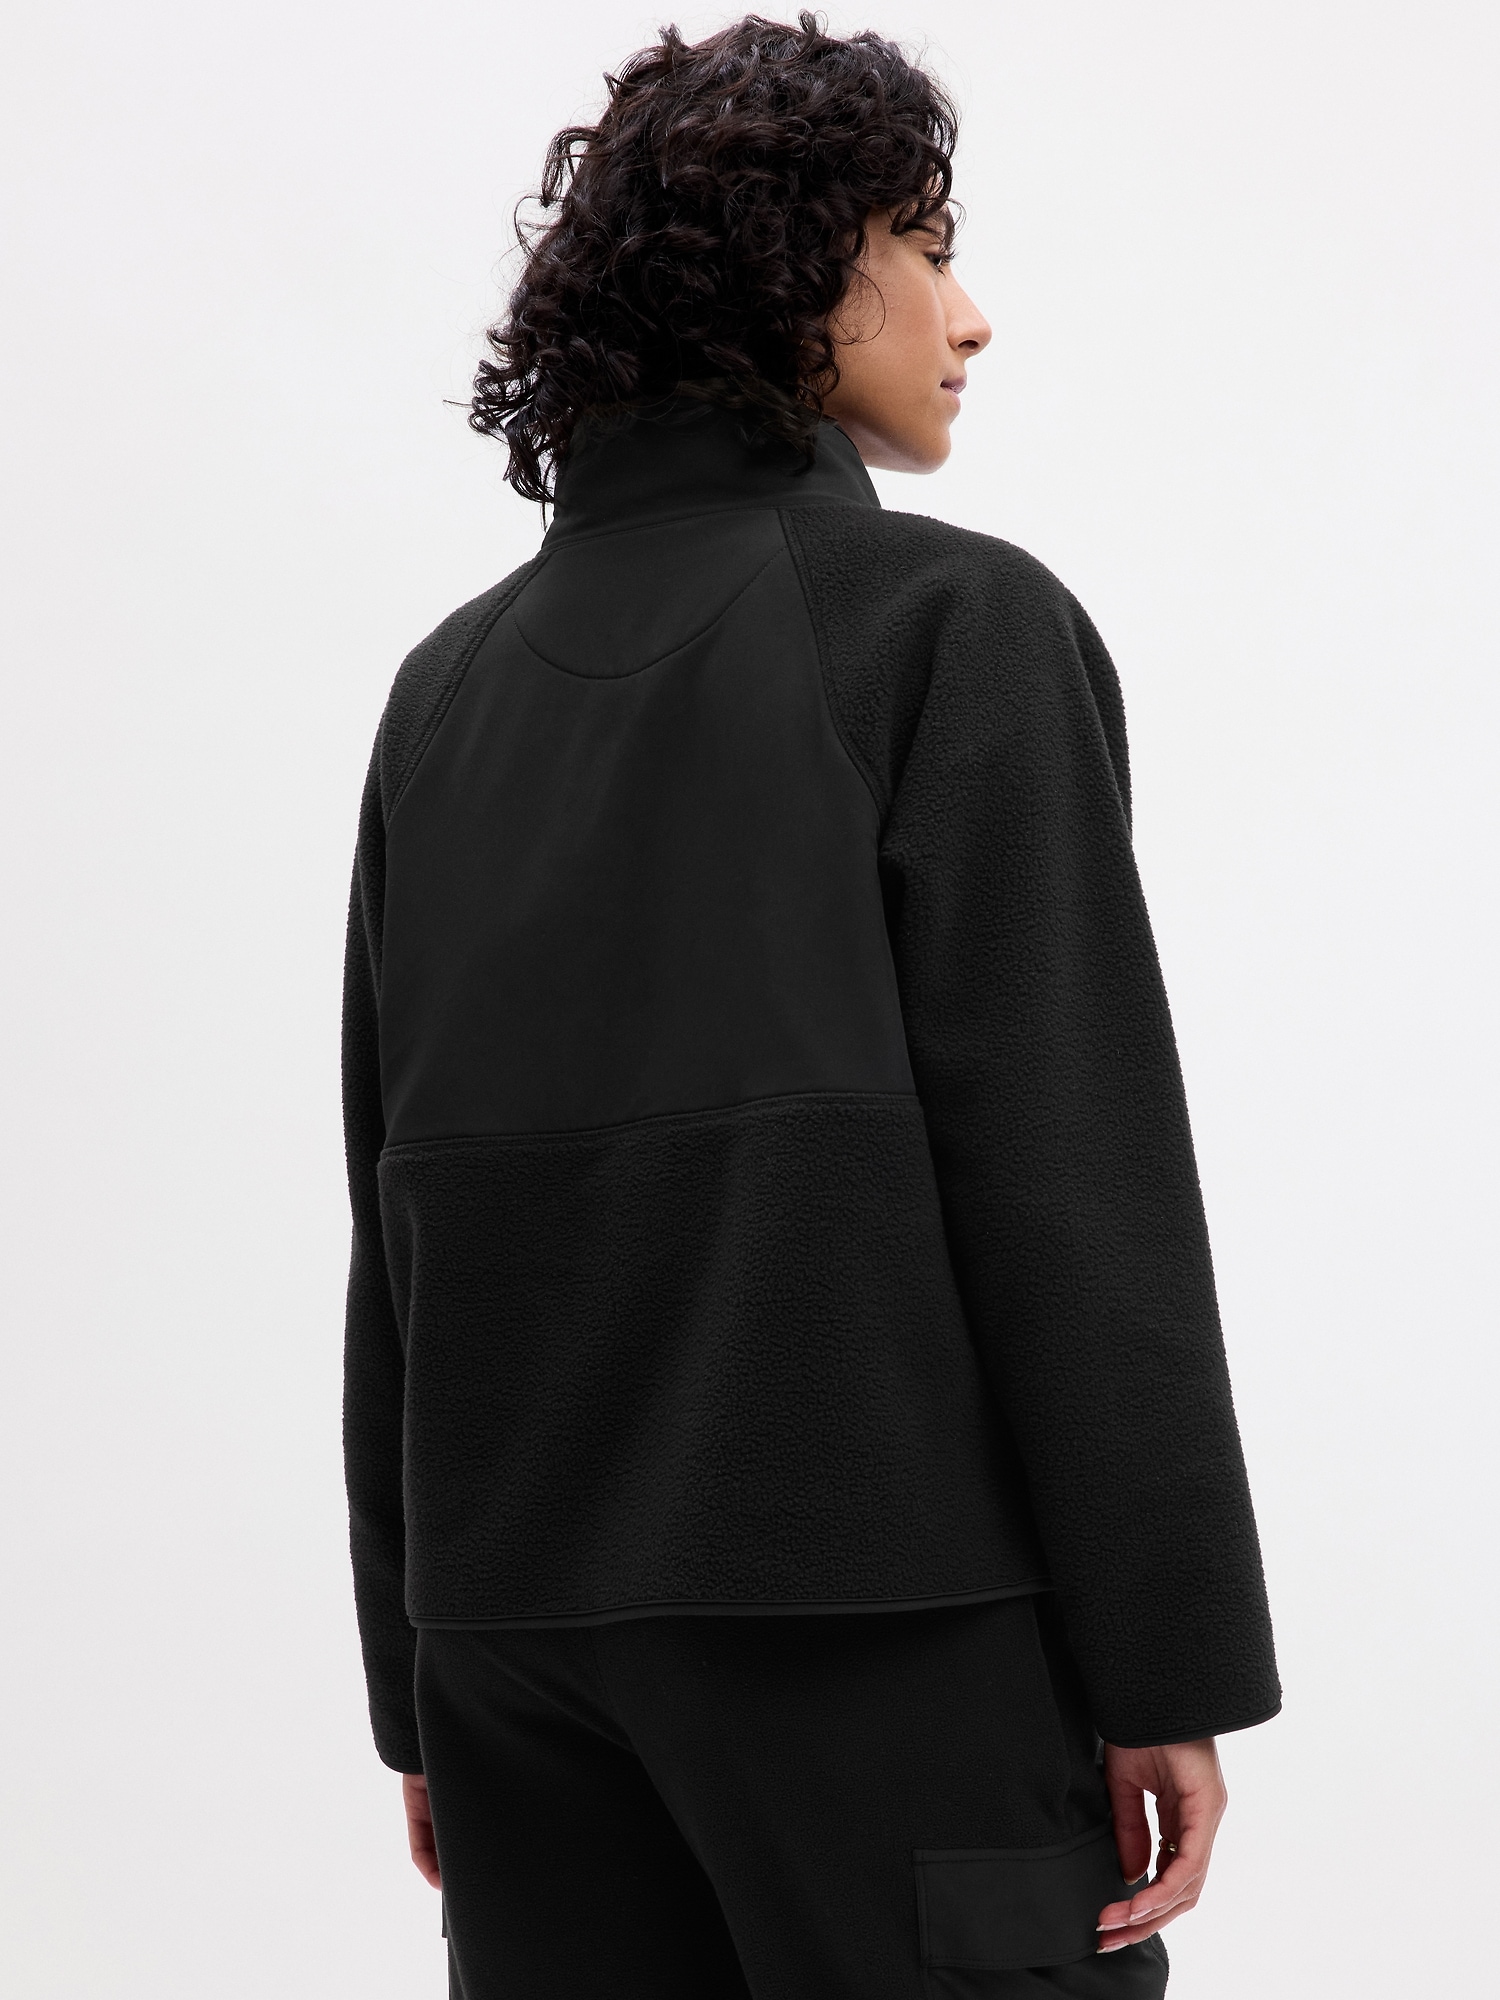 Gap Body Fit Black Full Zip Activewear Jacket Long Sleeve Women